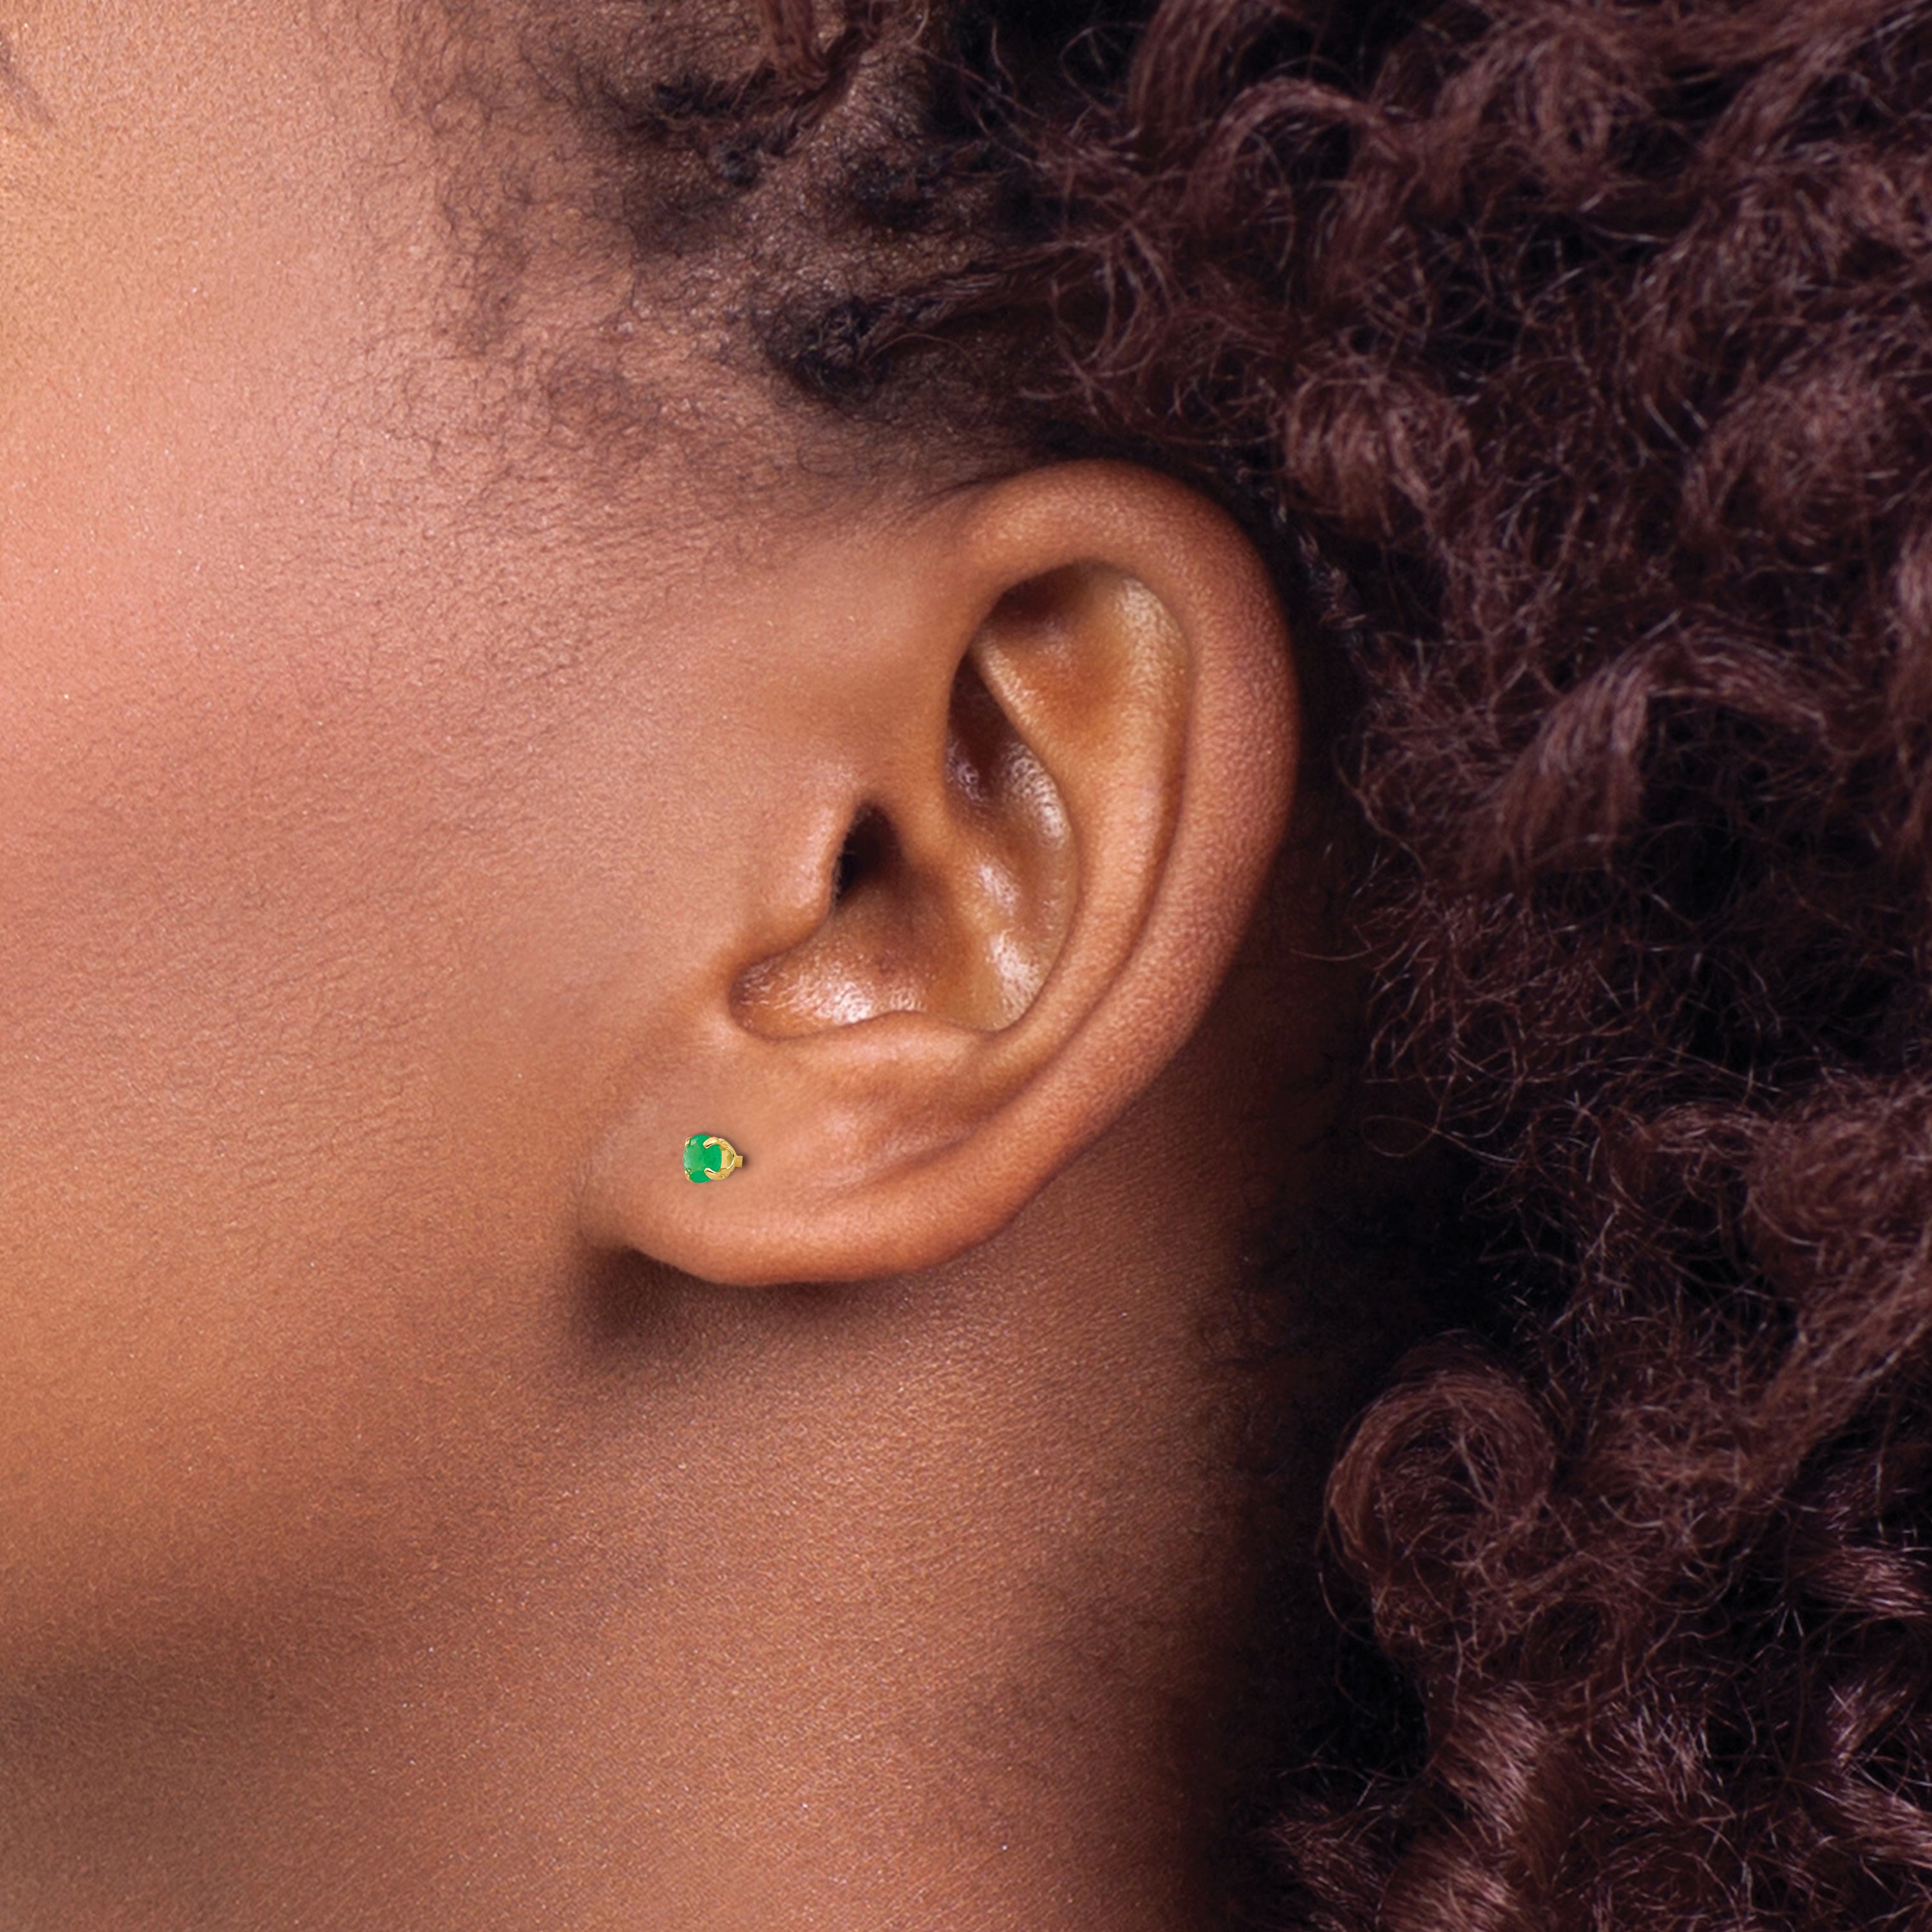 14k Madi K 3mm Emerald Earrings